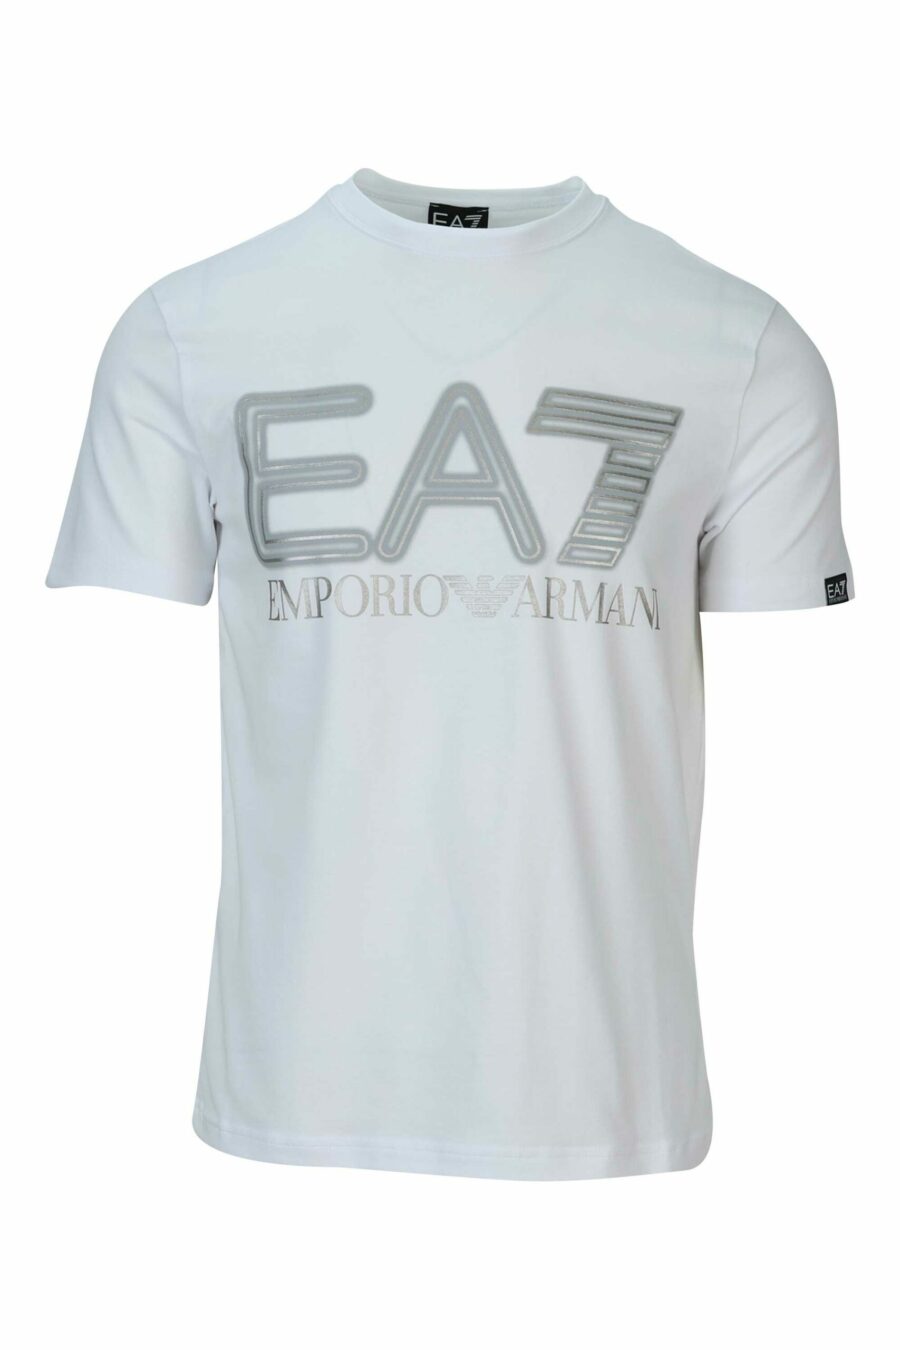 Camiseta blanca con maxilogo "lux identity" plateado neón - 8057970672319 scaled